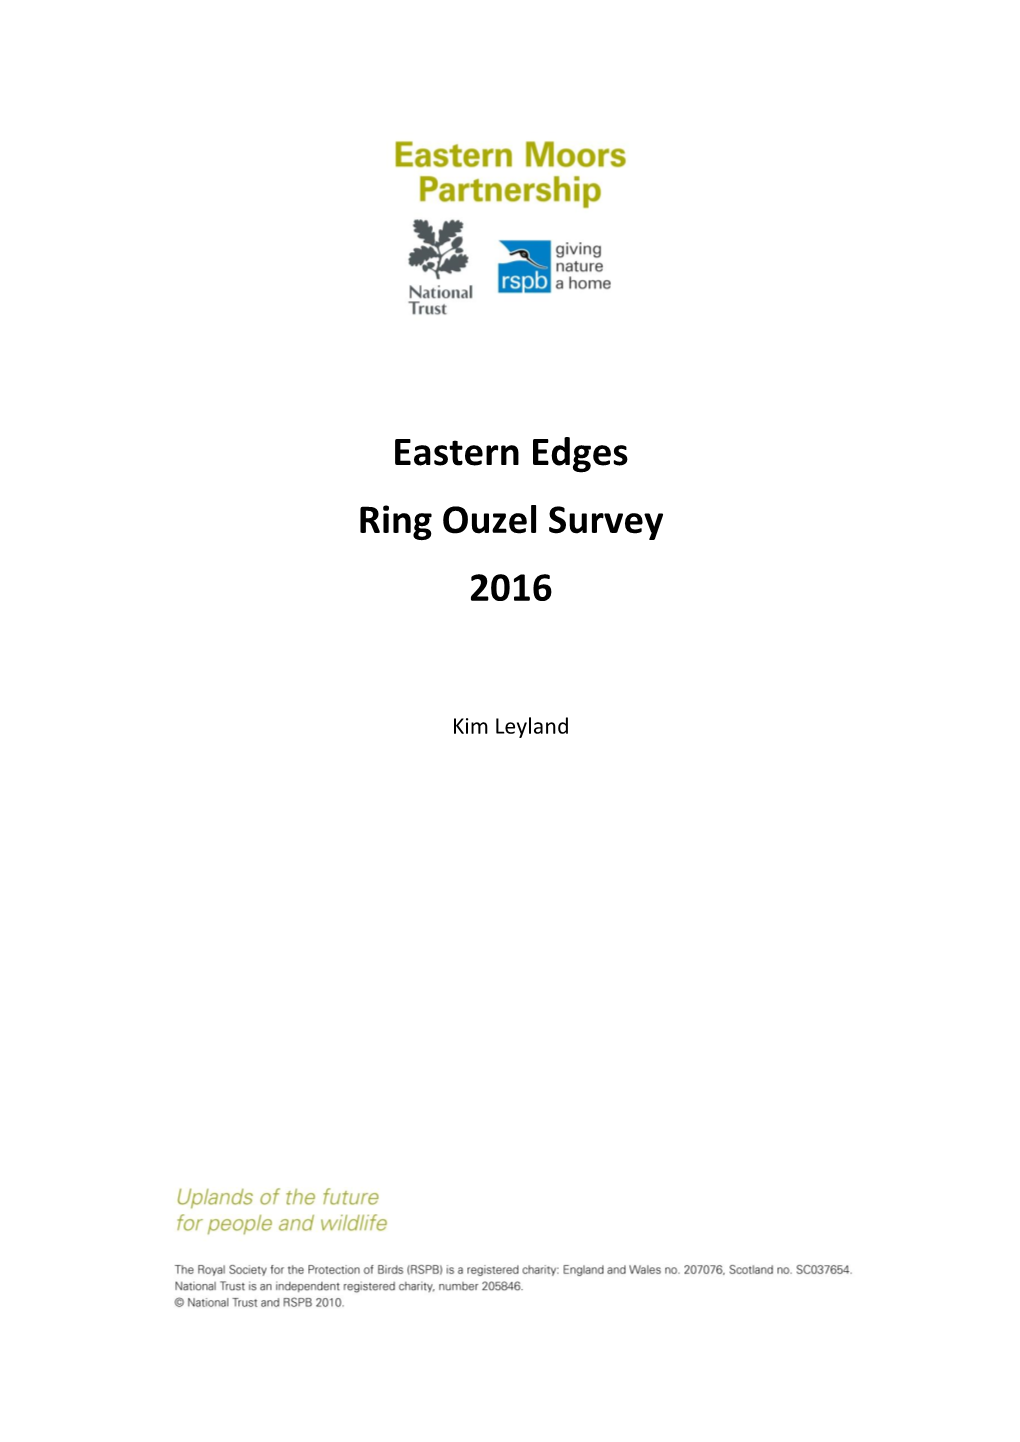 Eastern Edges Ring Ouzel Survey 2016